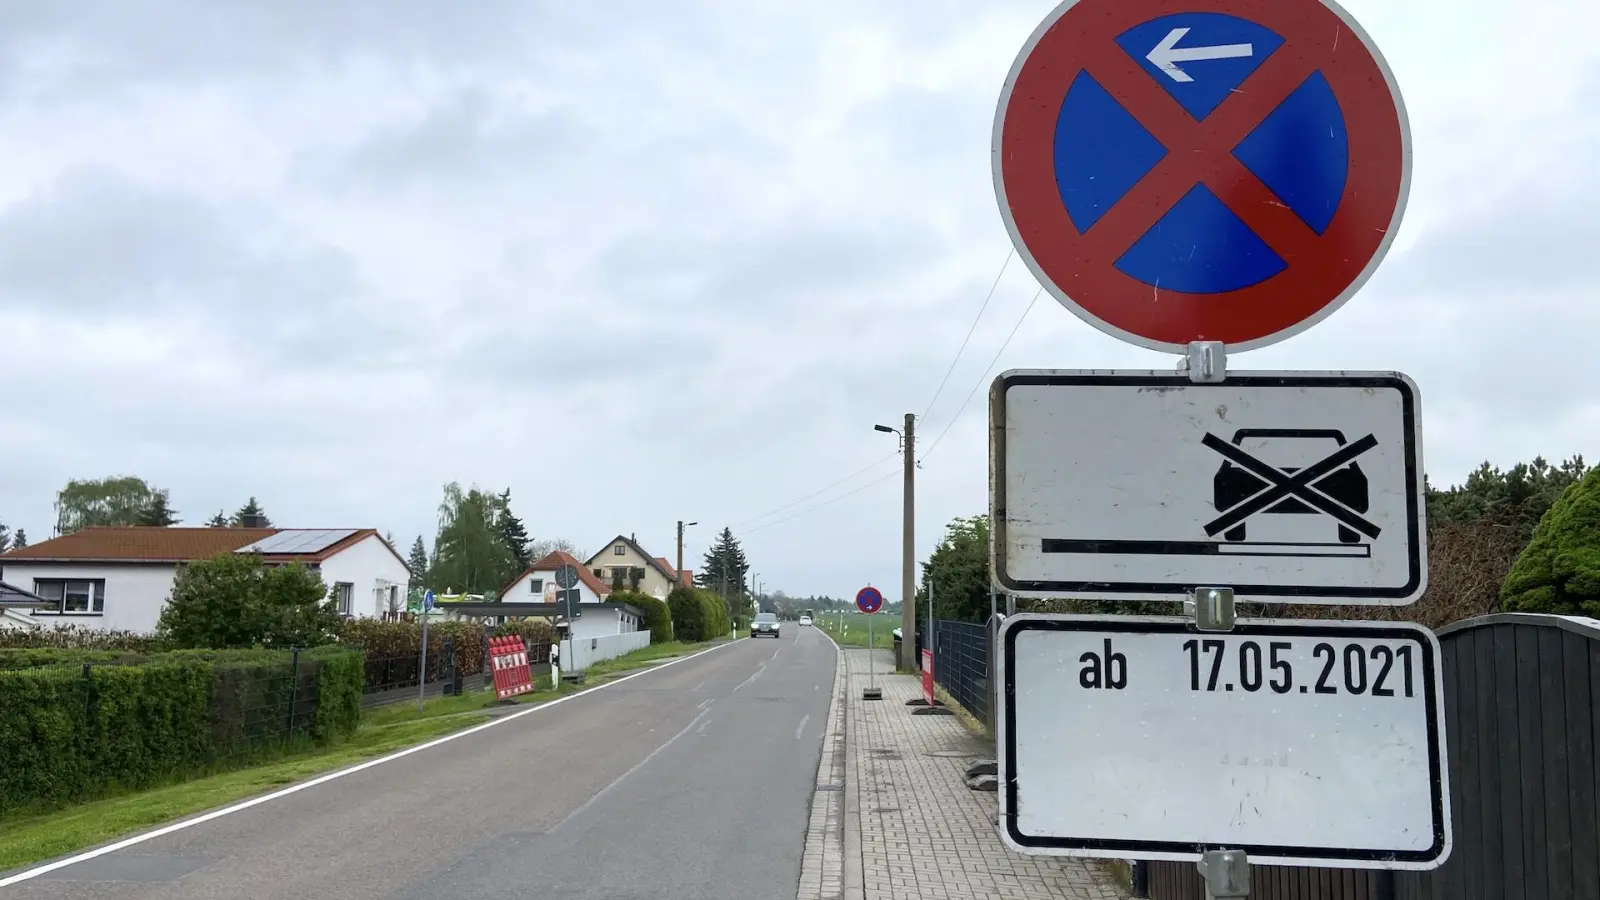 Kriekauer Straße in Plösitz kommende Woche gesperrt (Foto: taucha-kompakt.de)